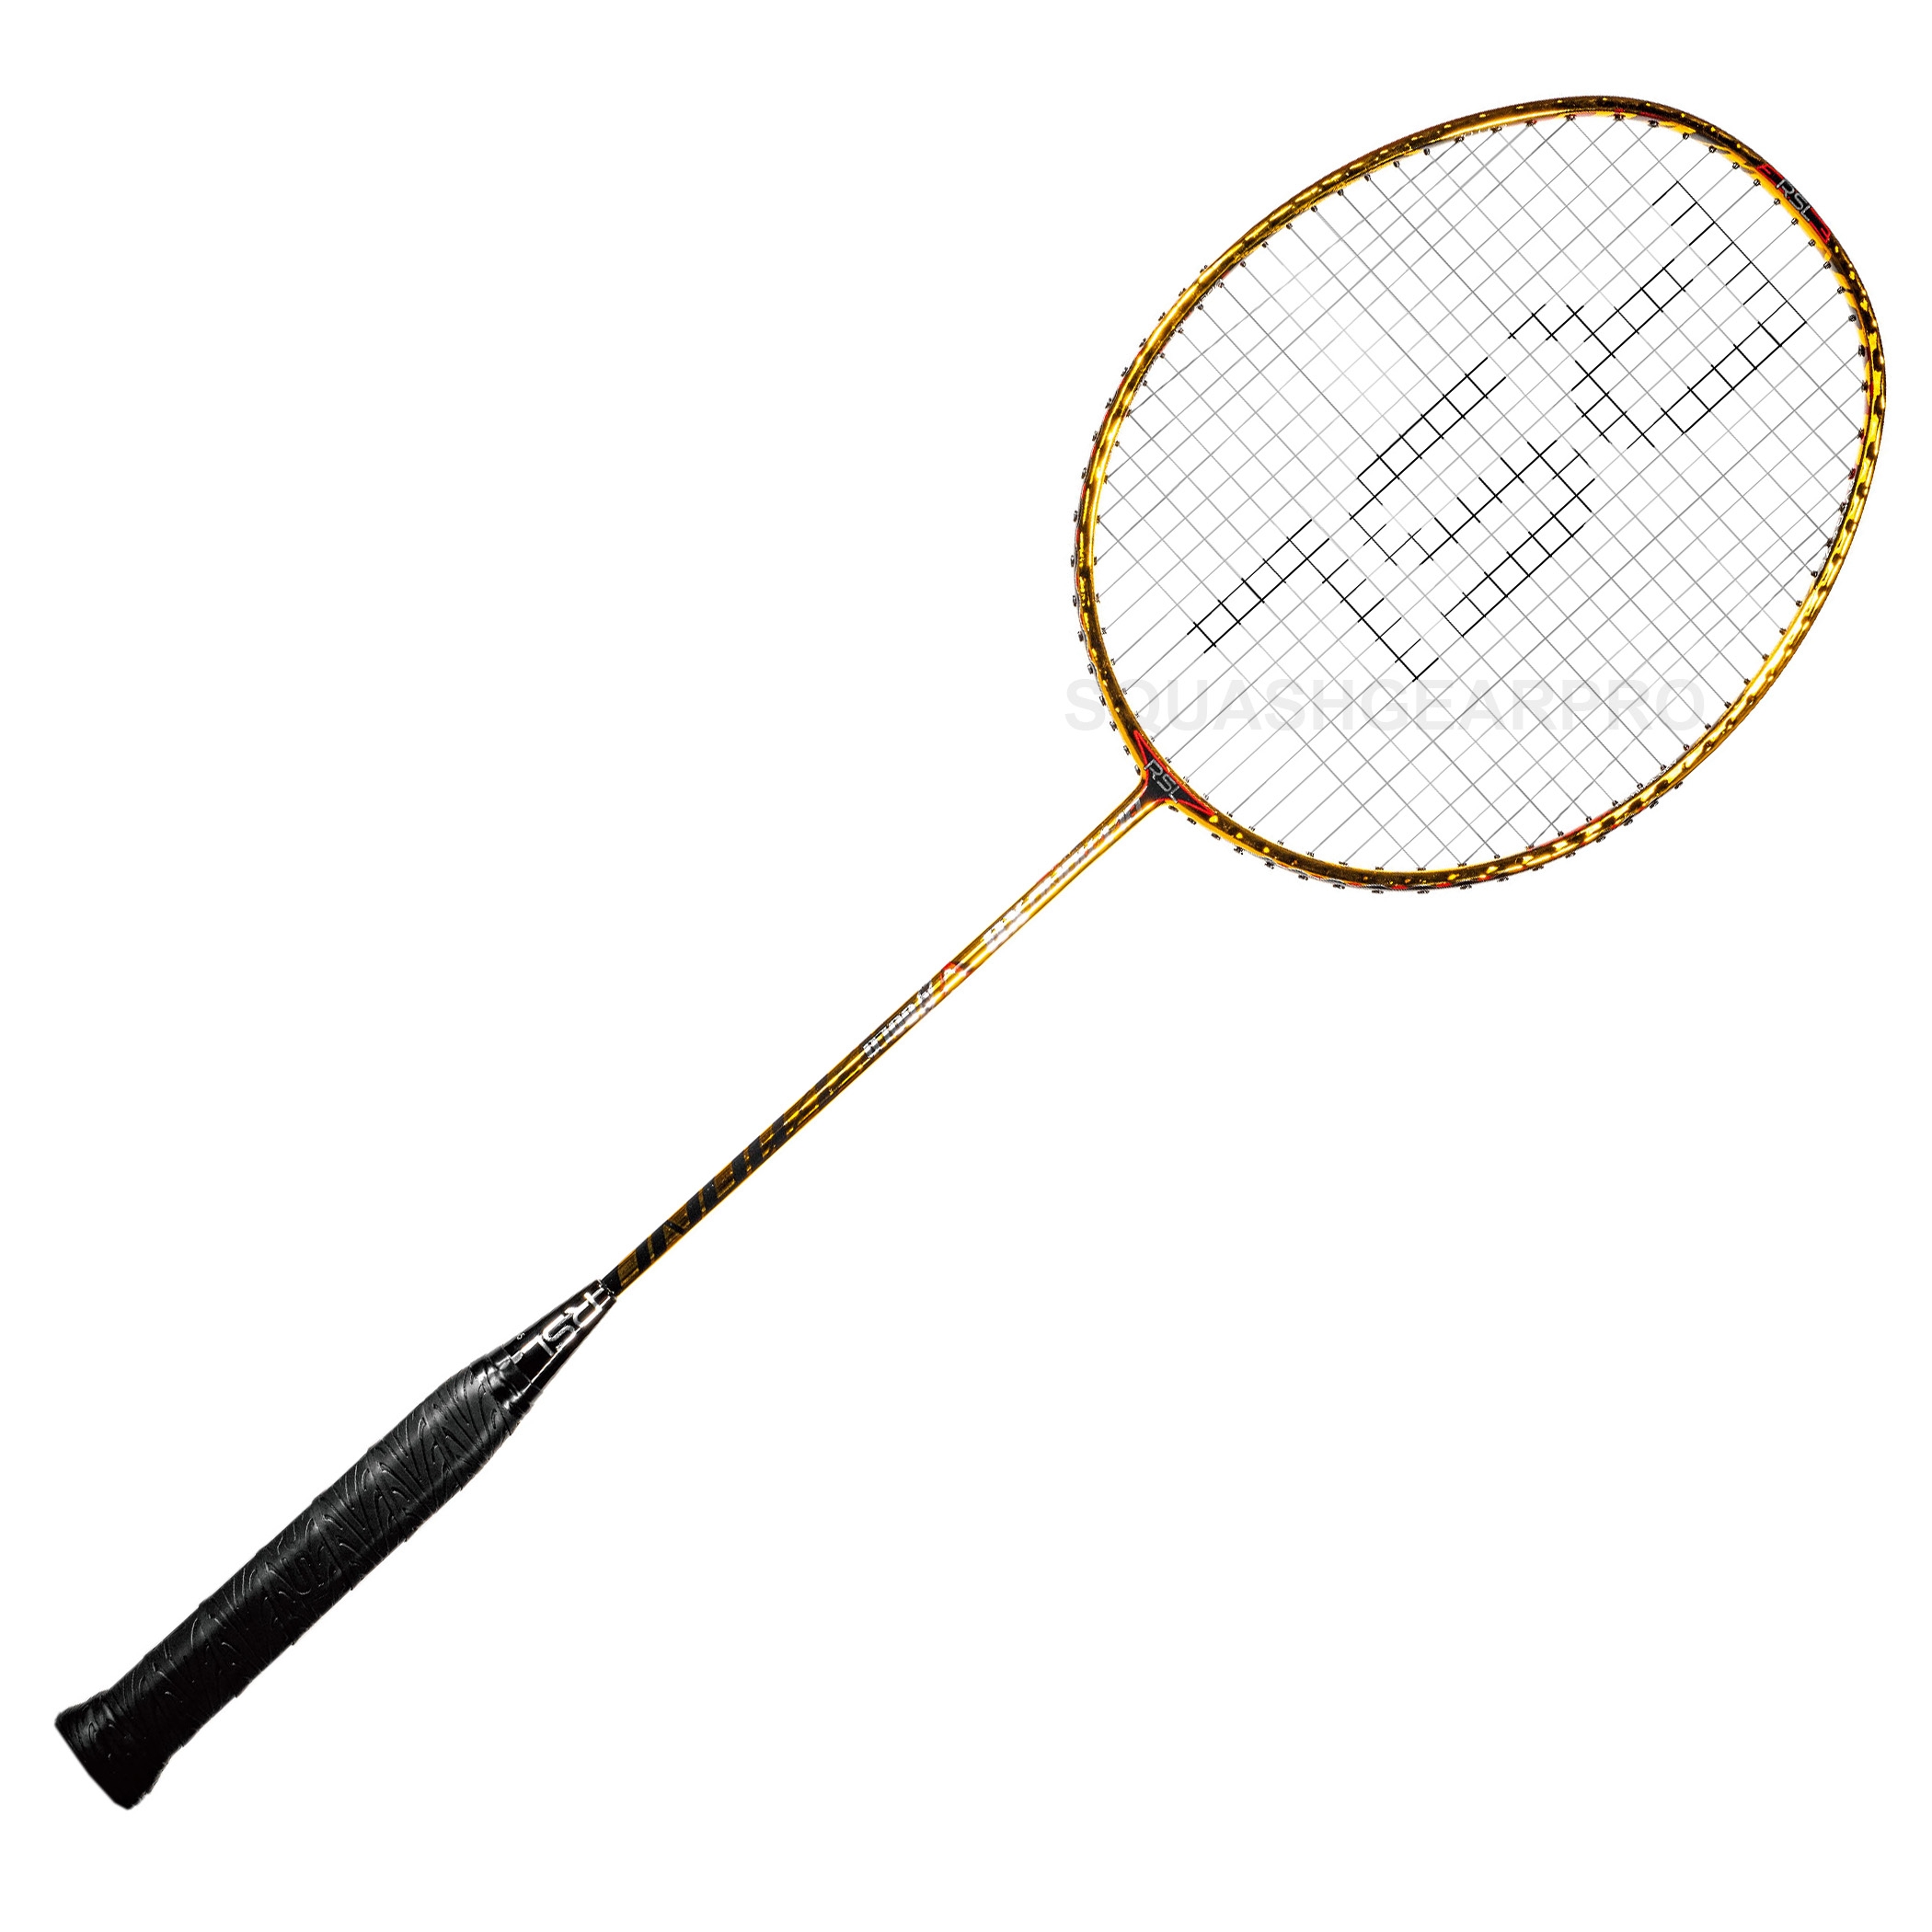 Rsl Badminton Racket Sale Online, SAVE 57%